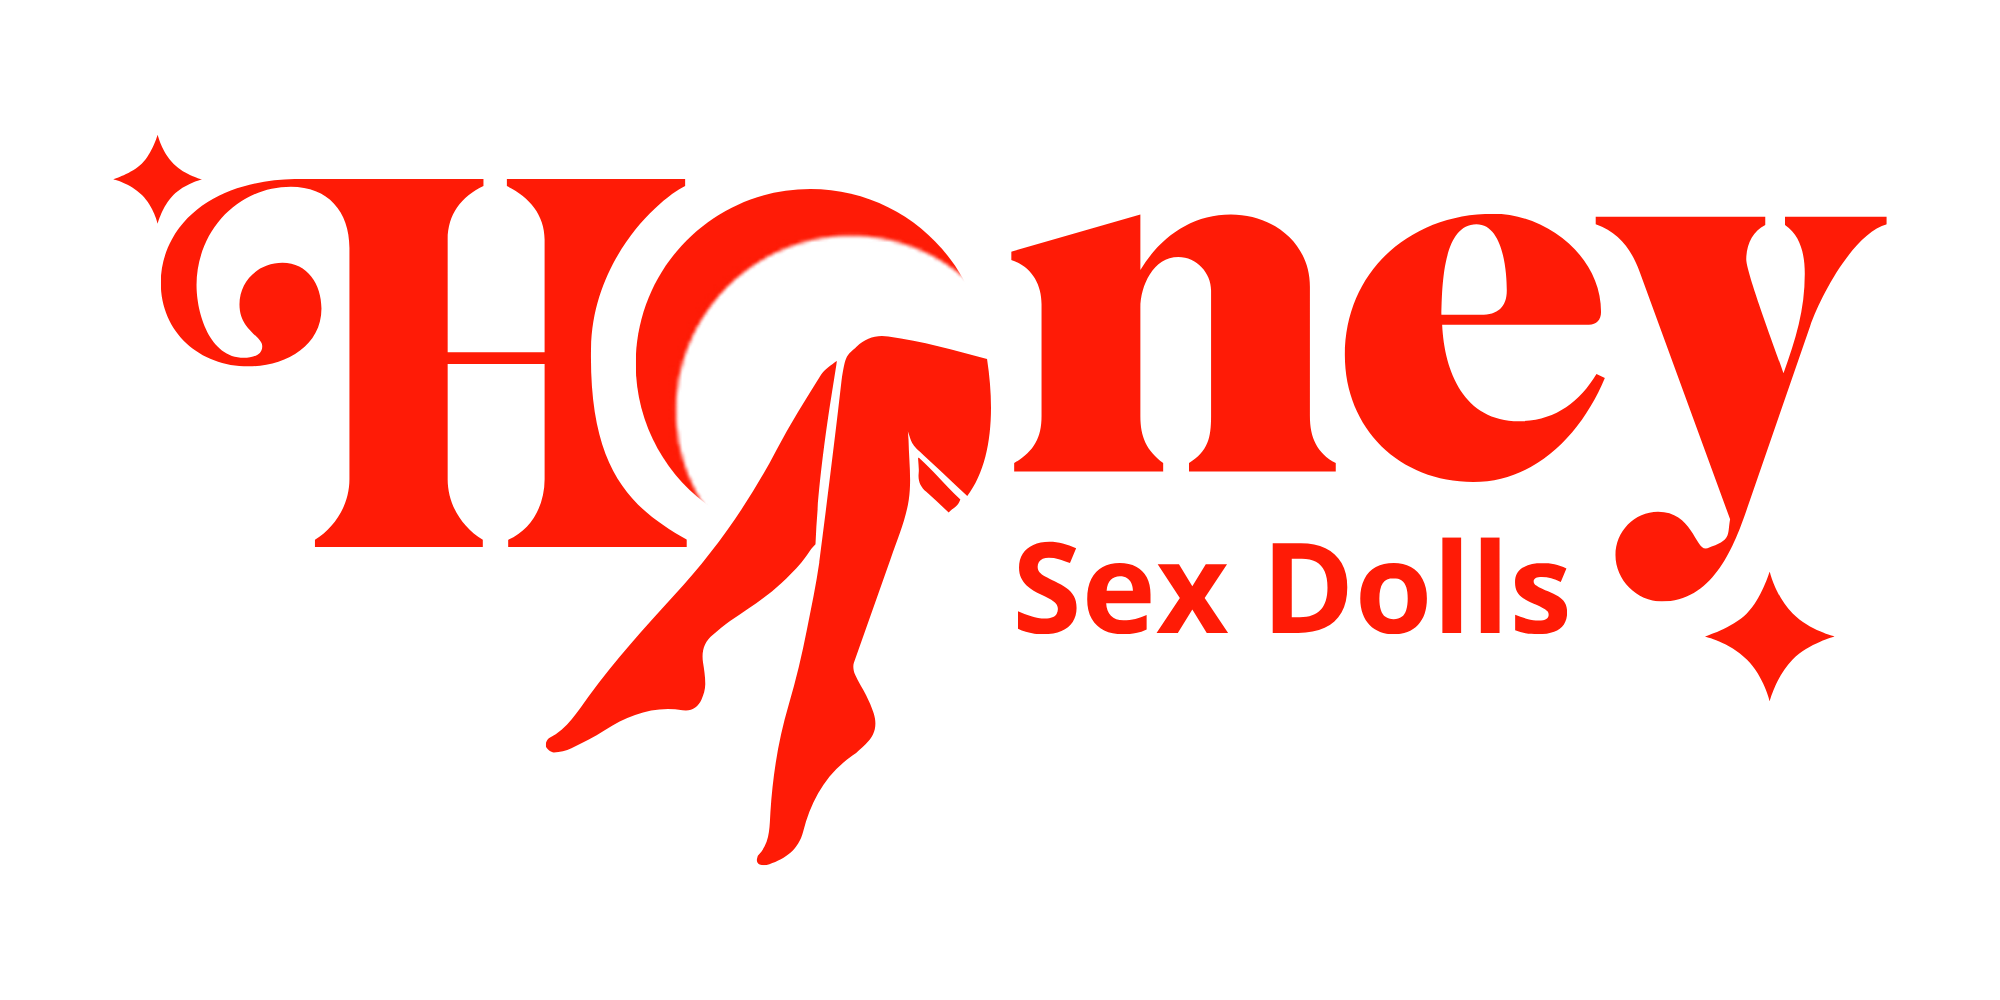 Honeysexdoll